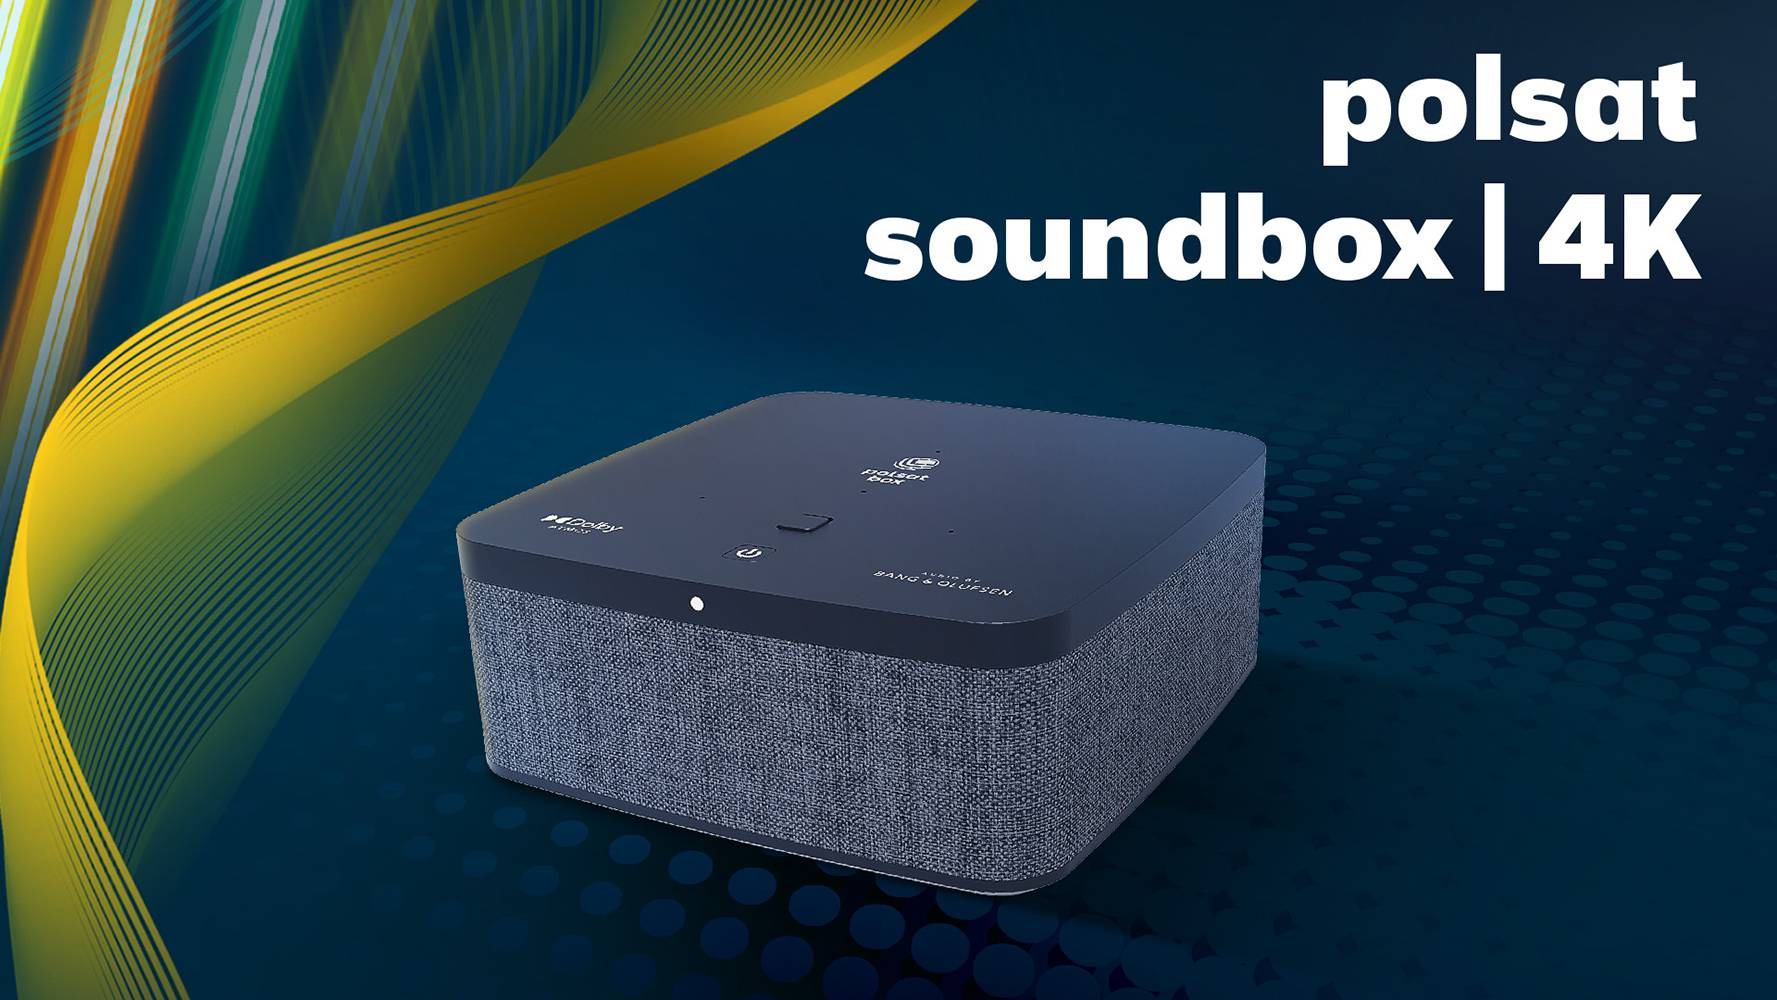 Nowy dekoder polsat soundbox 4K w ofercie Polsat Box